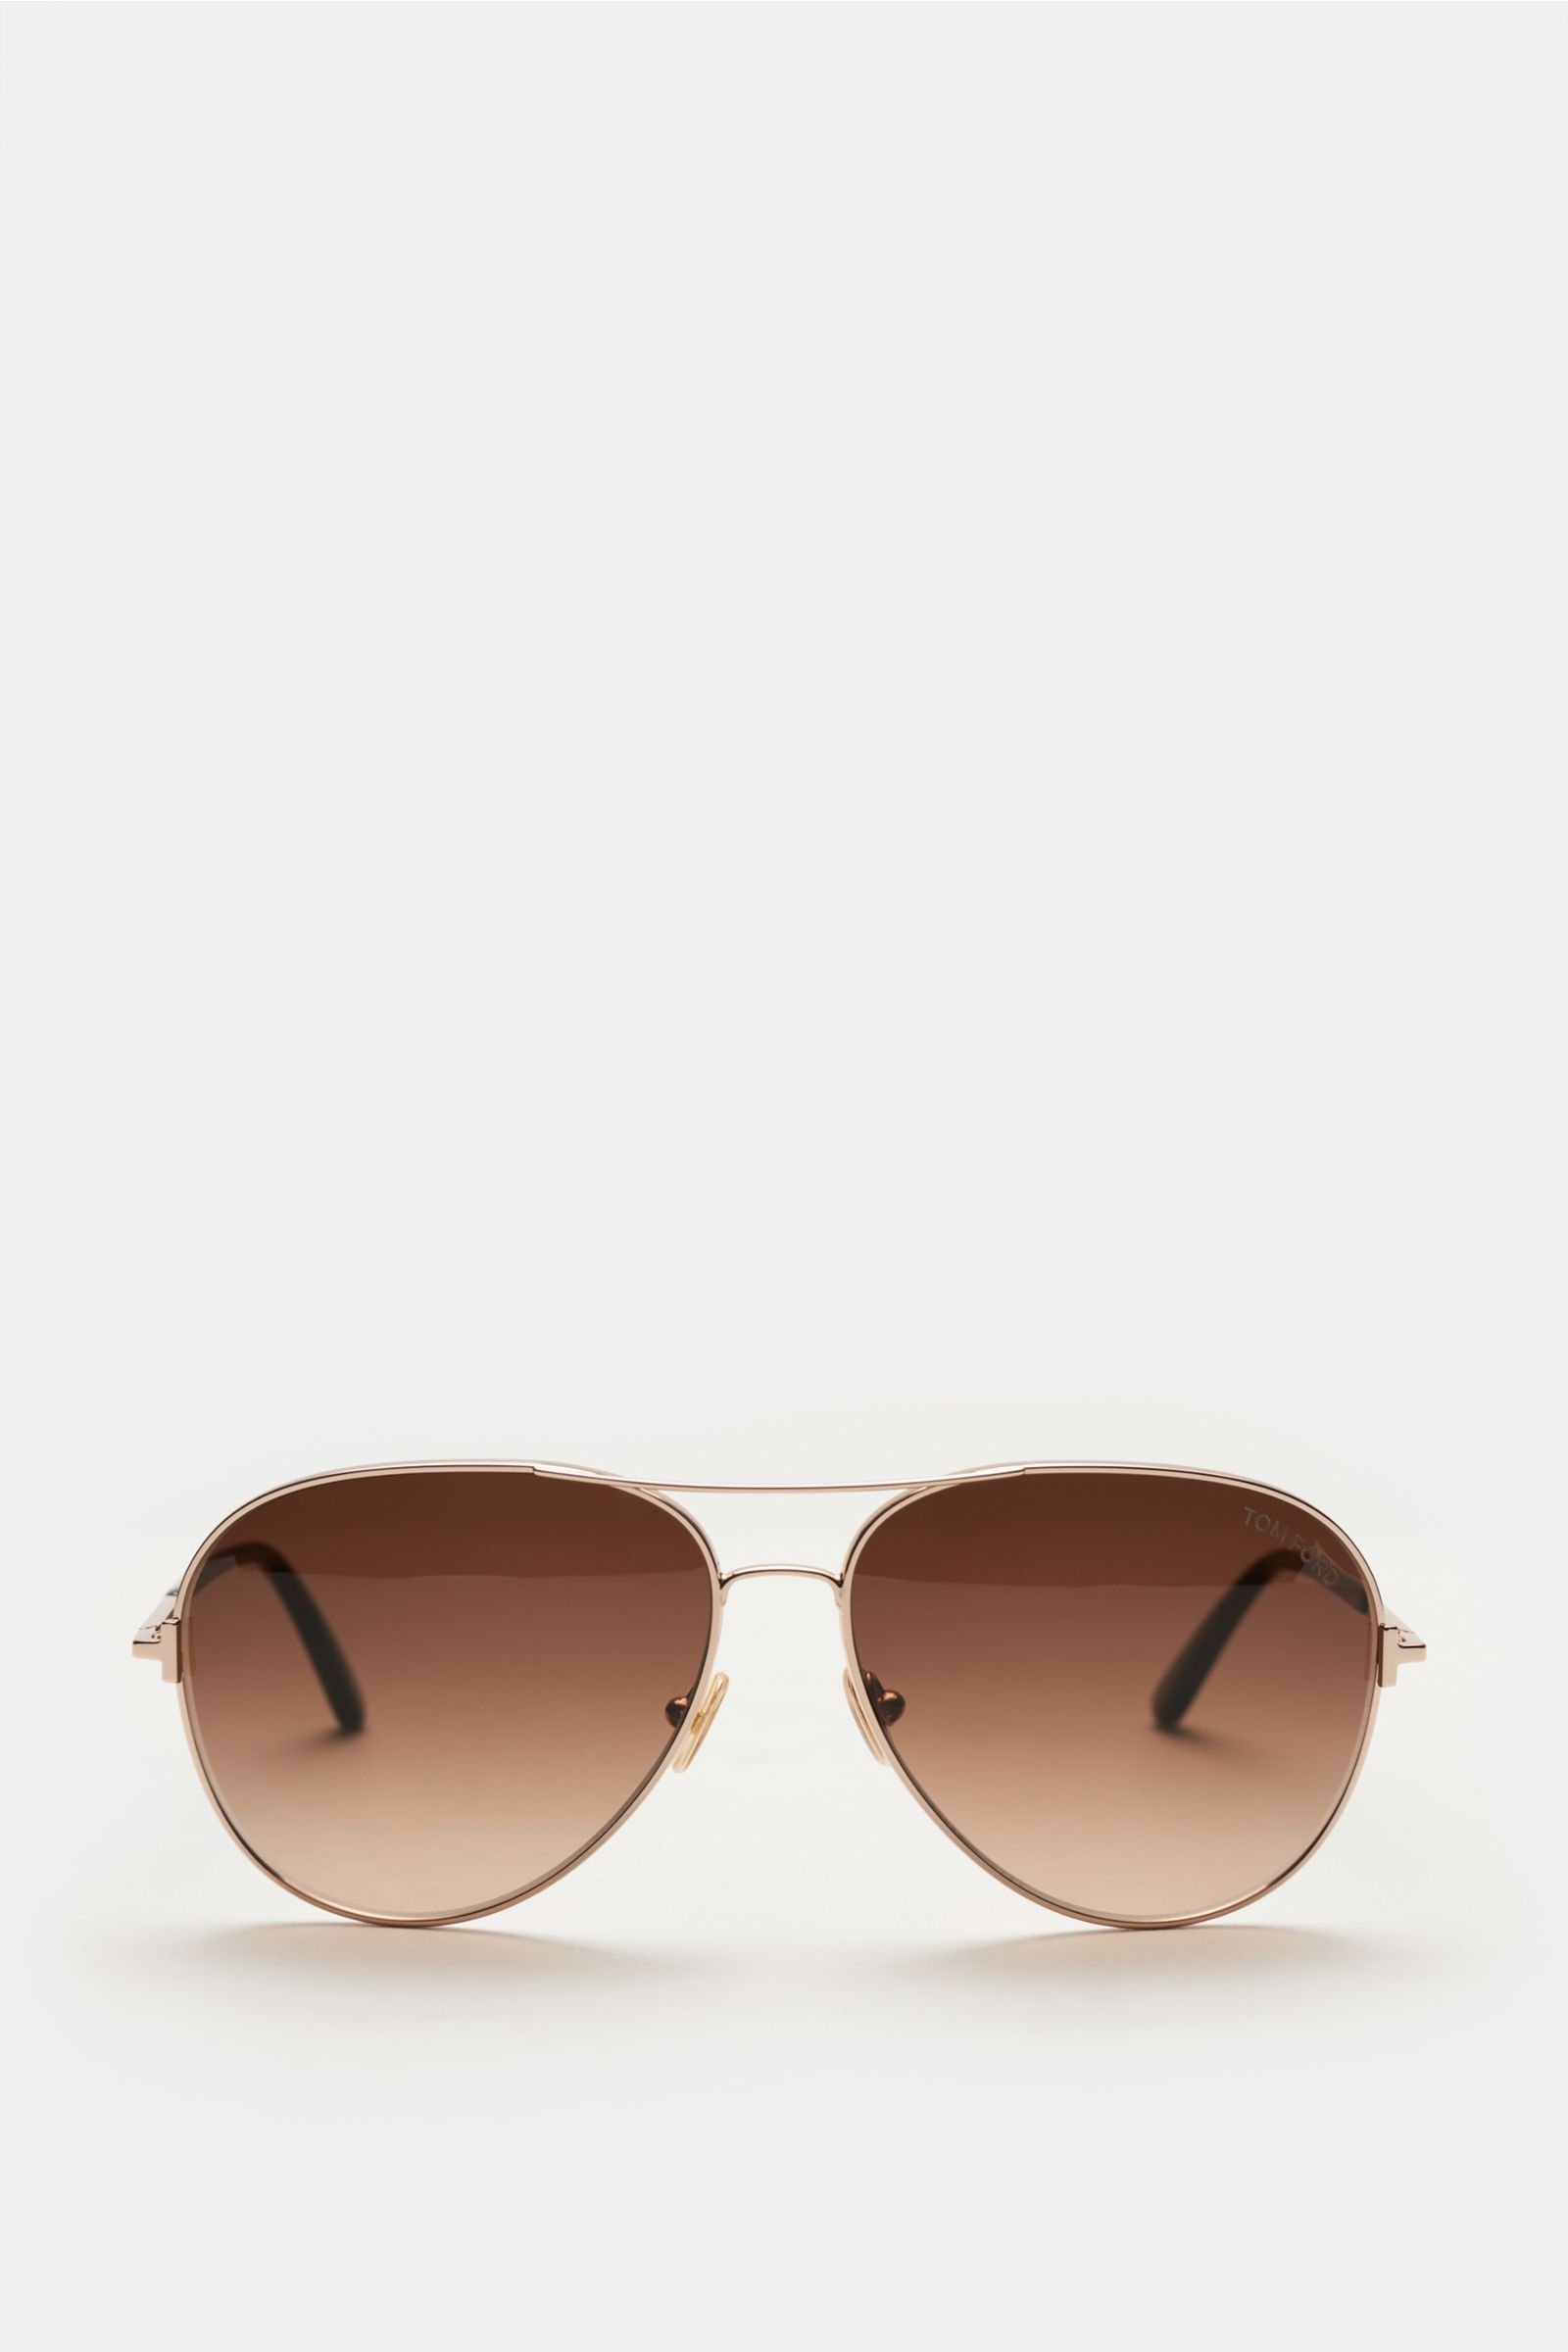 Sunglasses 'Clark' rose gold/brown